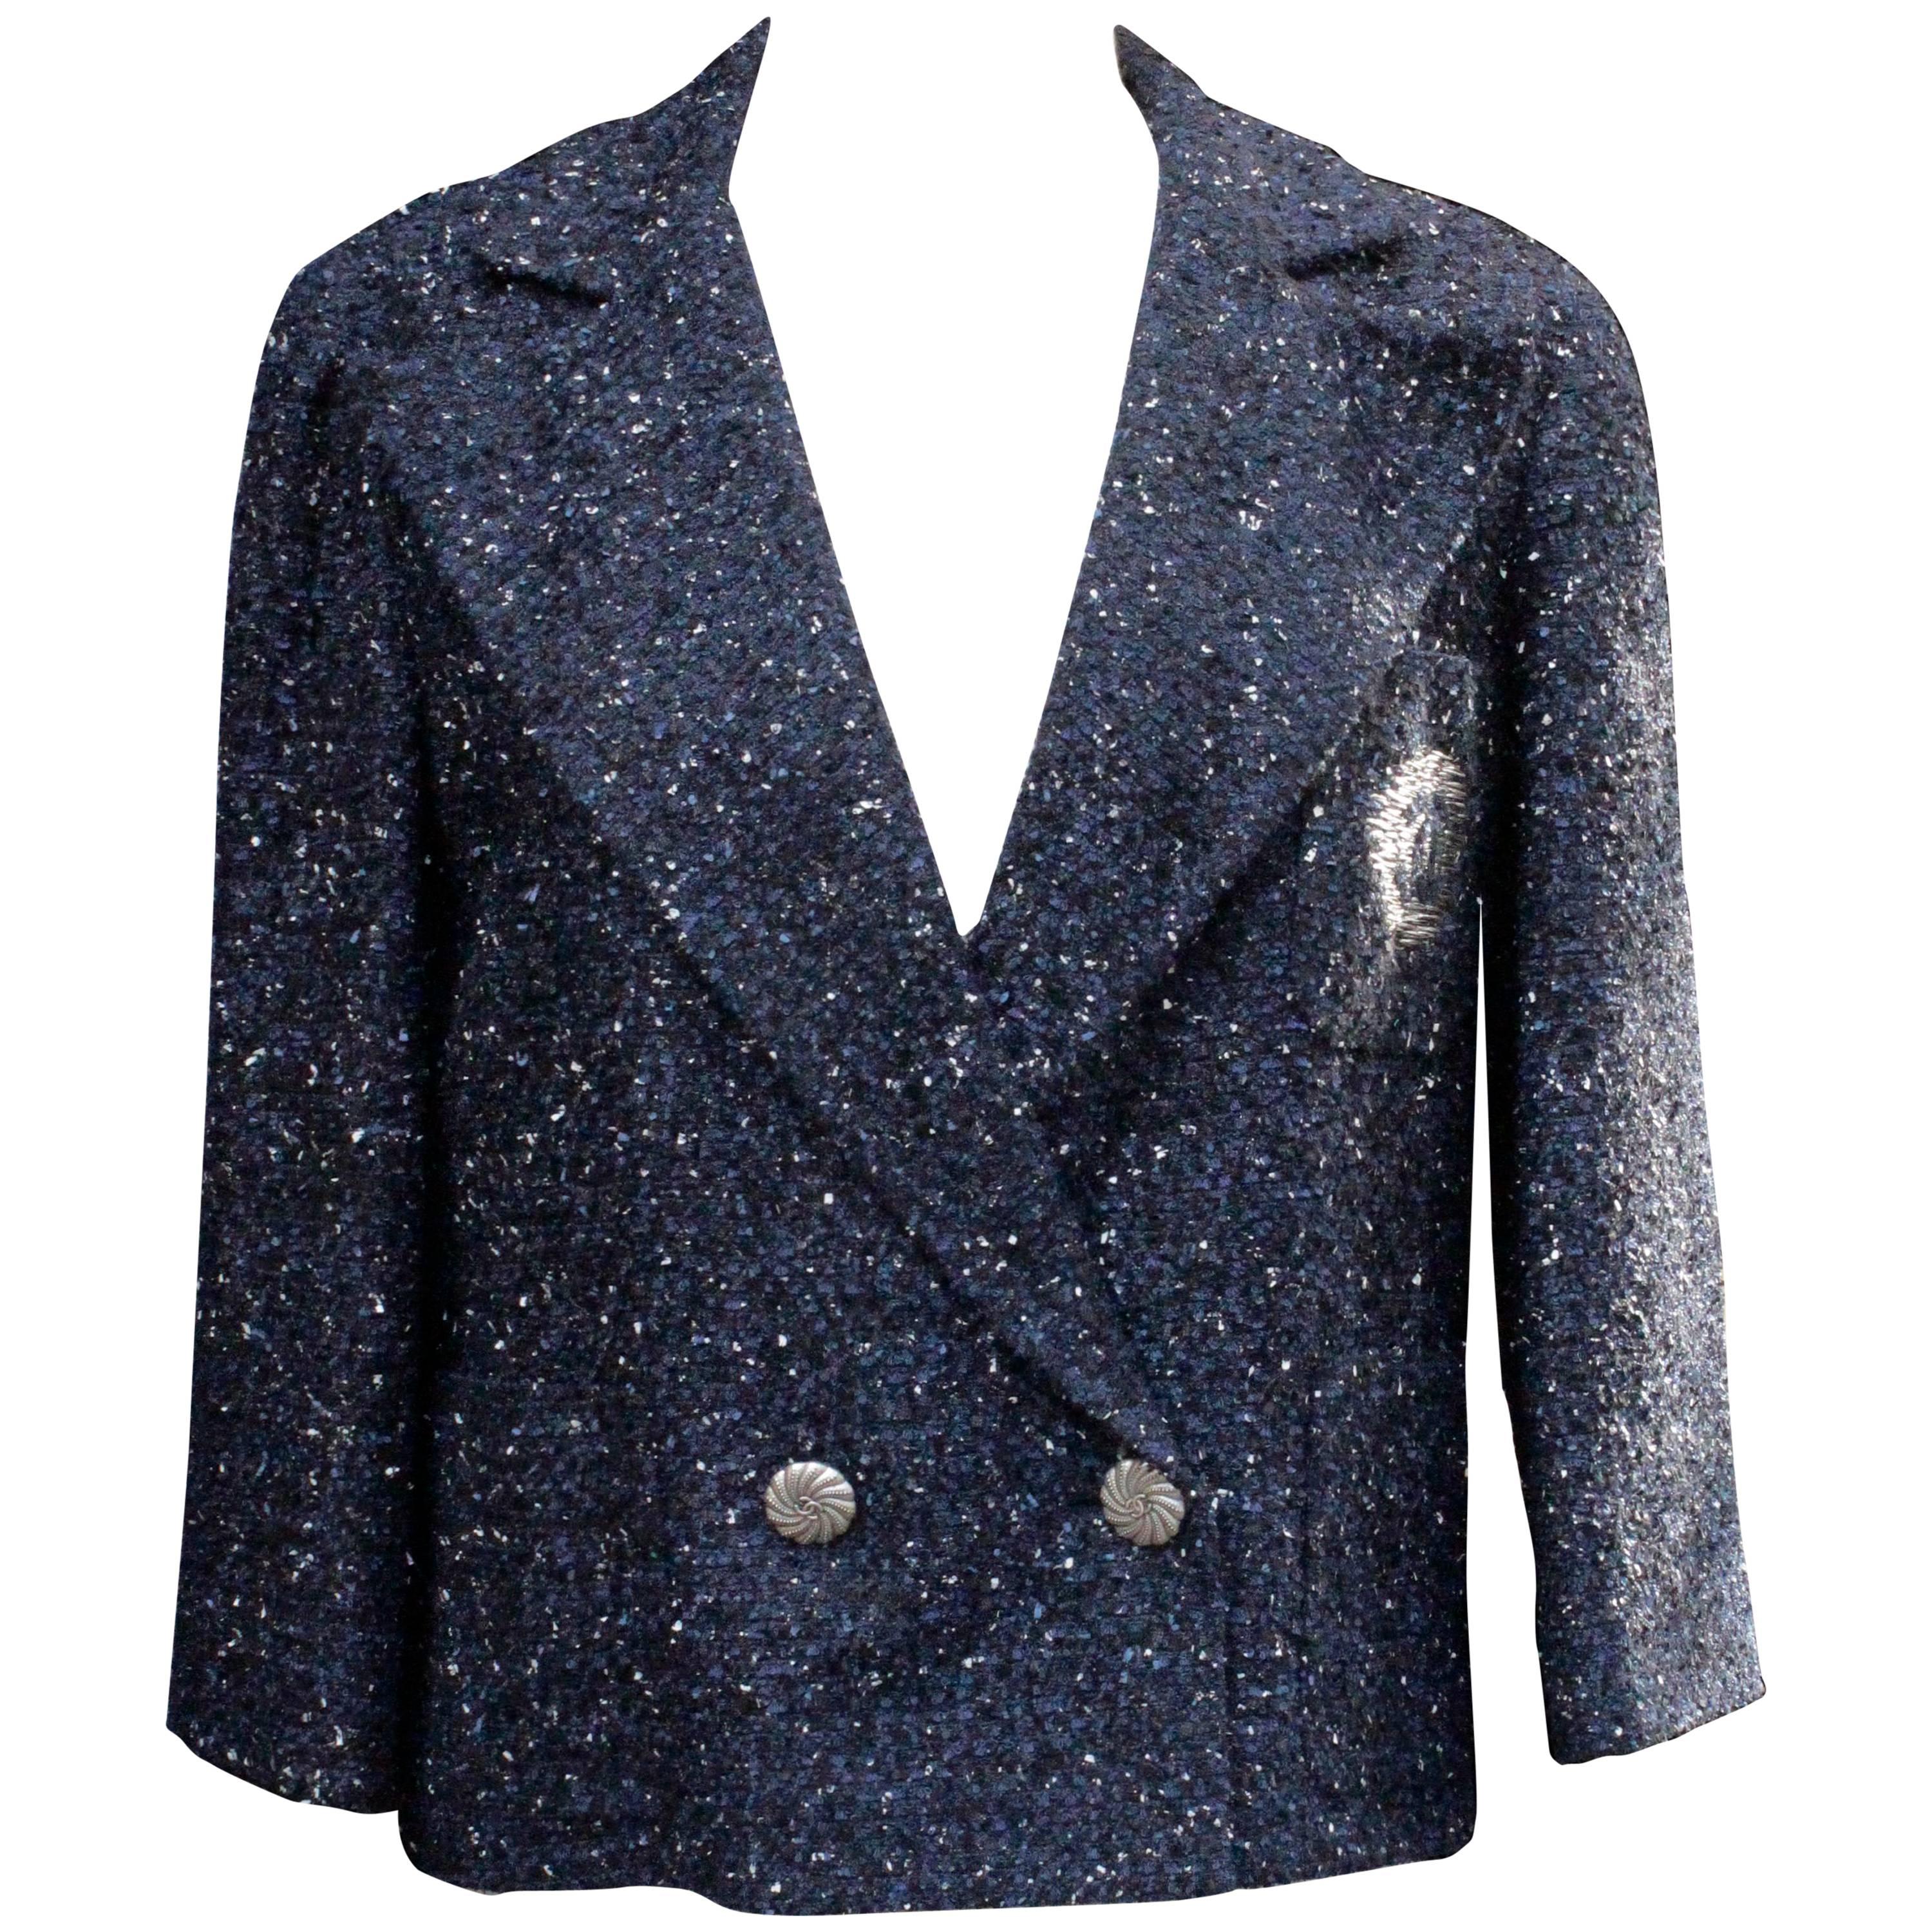 Spring 2012 Chanel Navy Blue Tweed Jacket